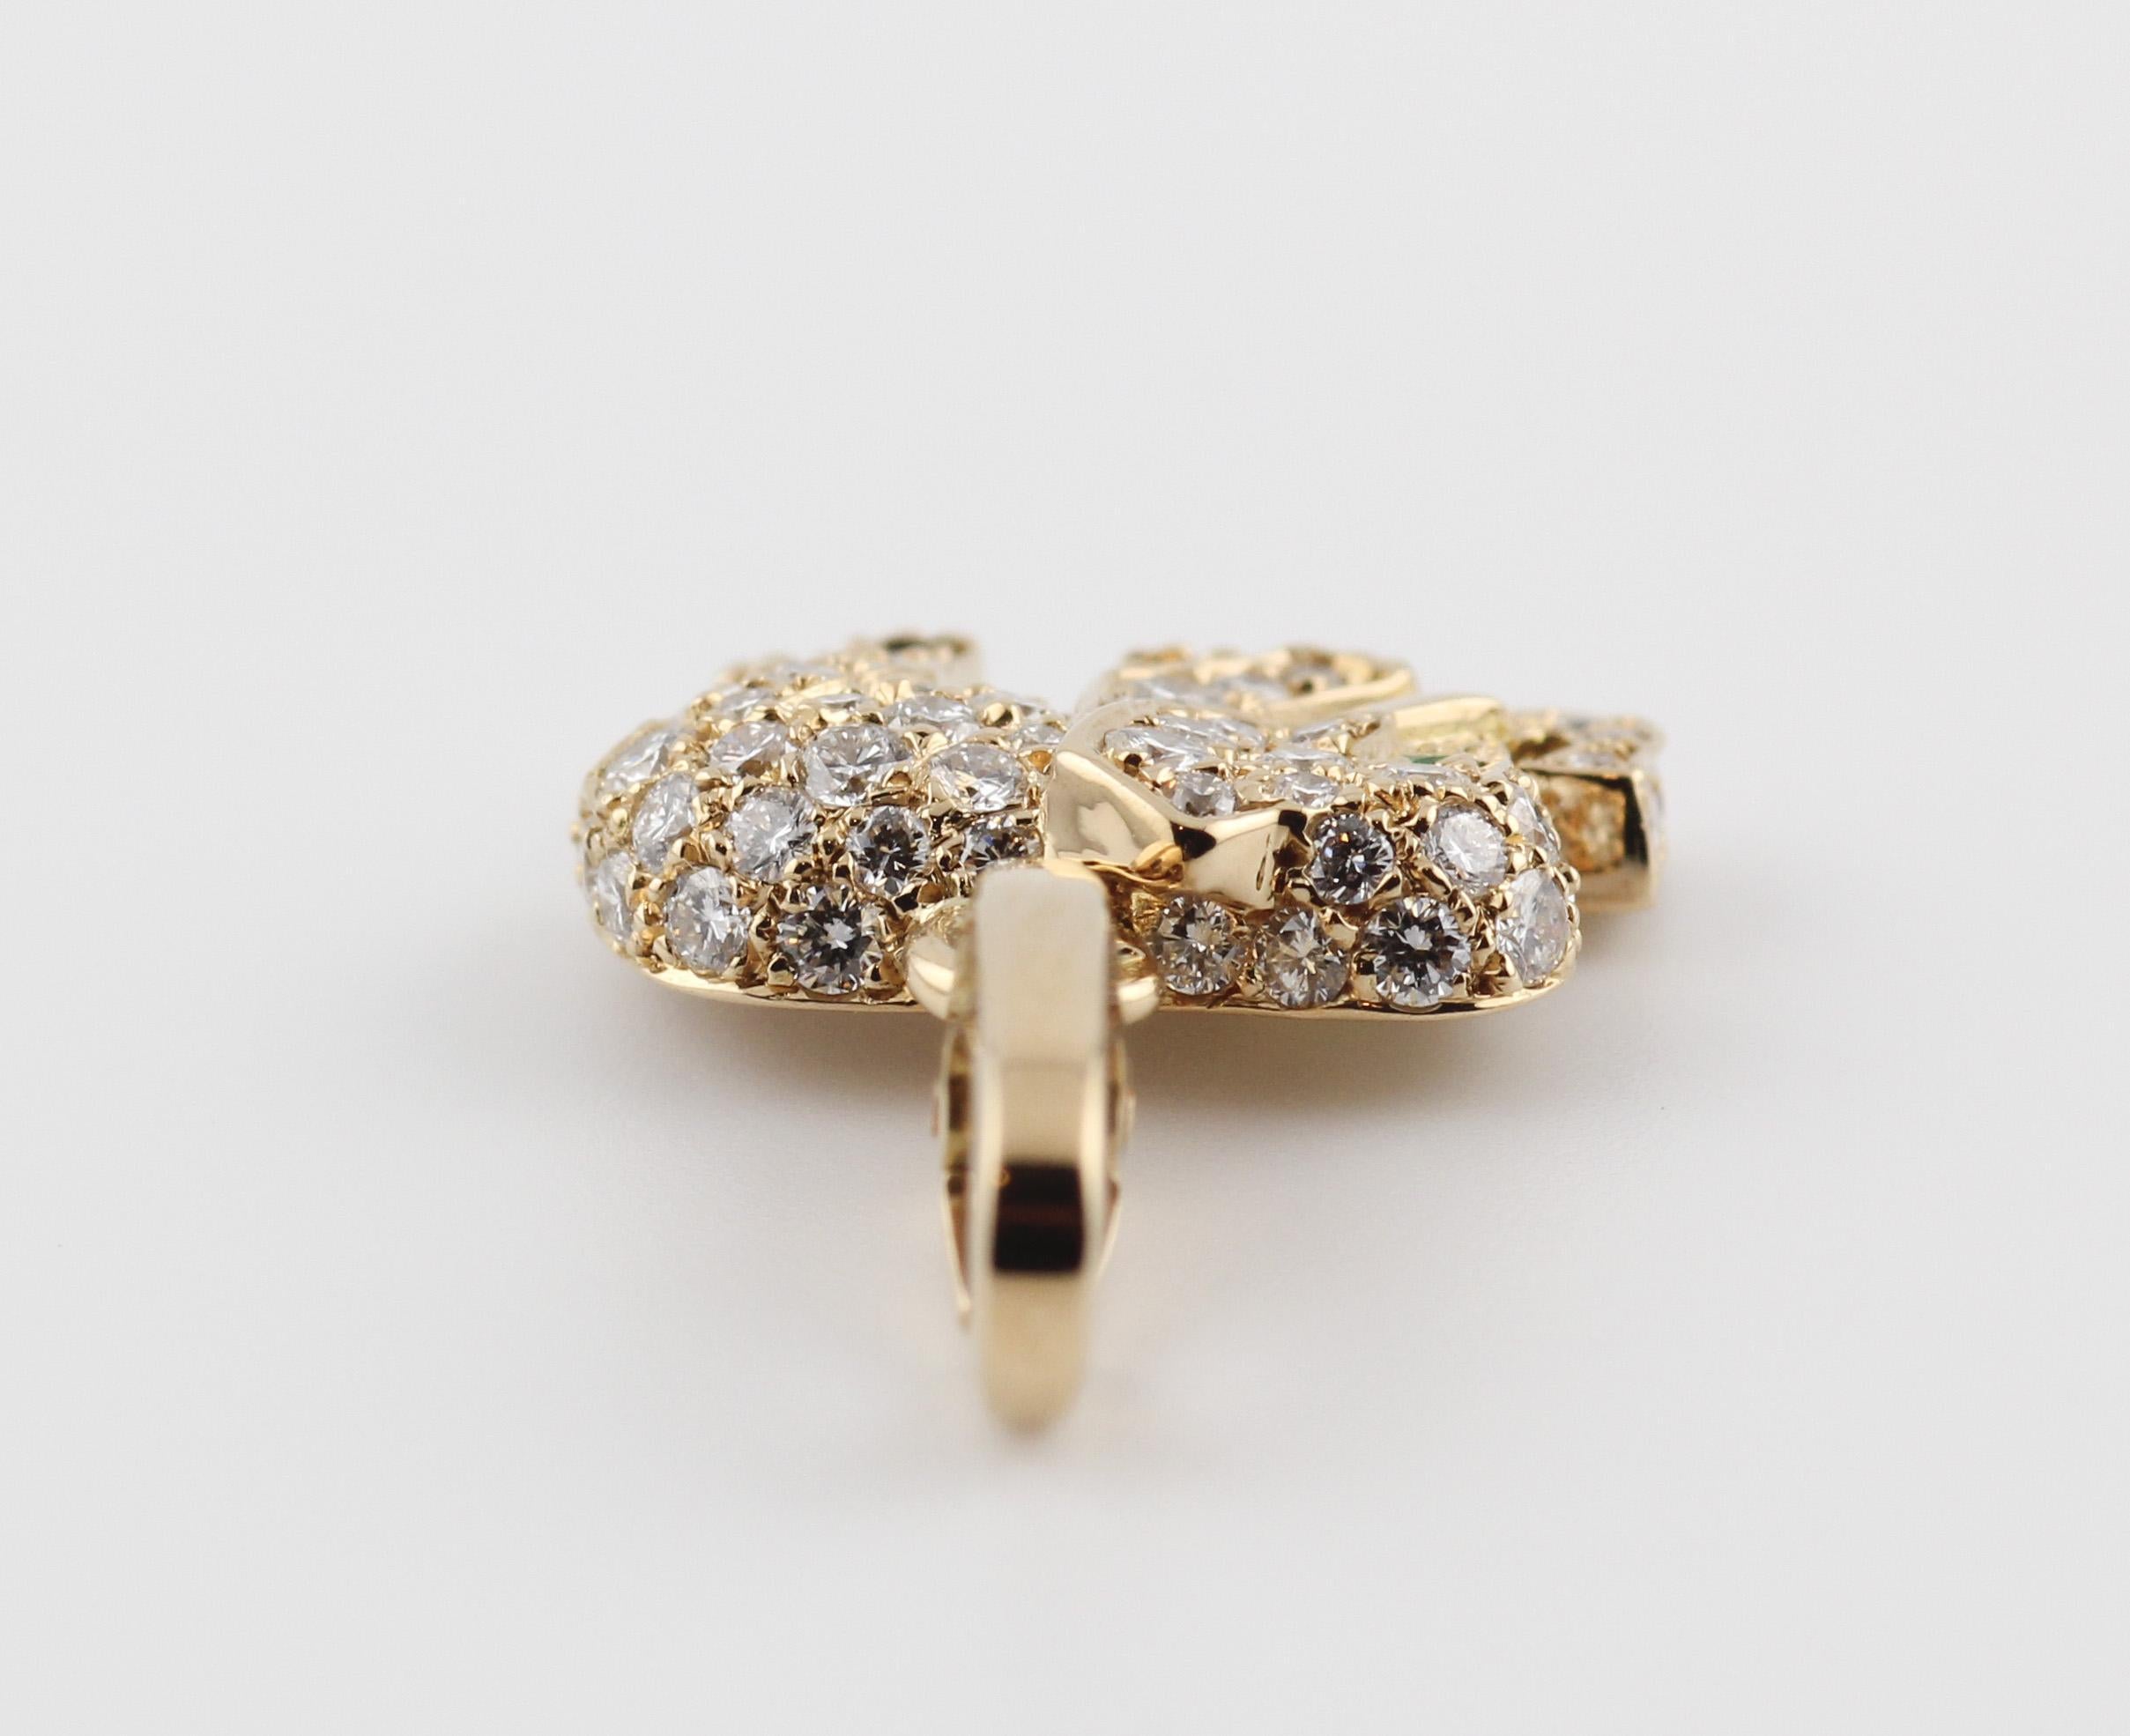 Cartier Diamond Emerald 18 Karat Yellow Gold Elephant Charm Pendant For Sale 1